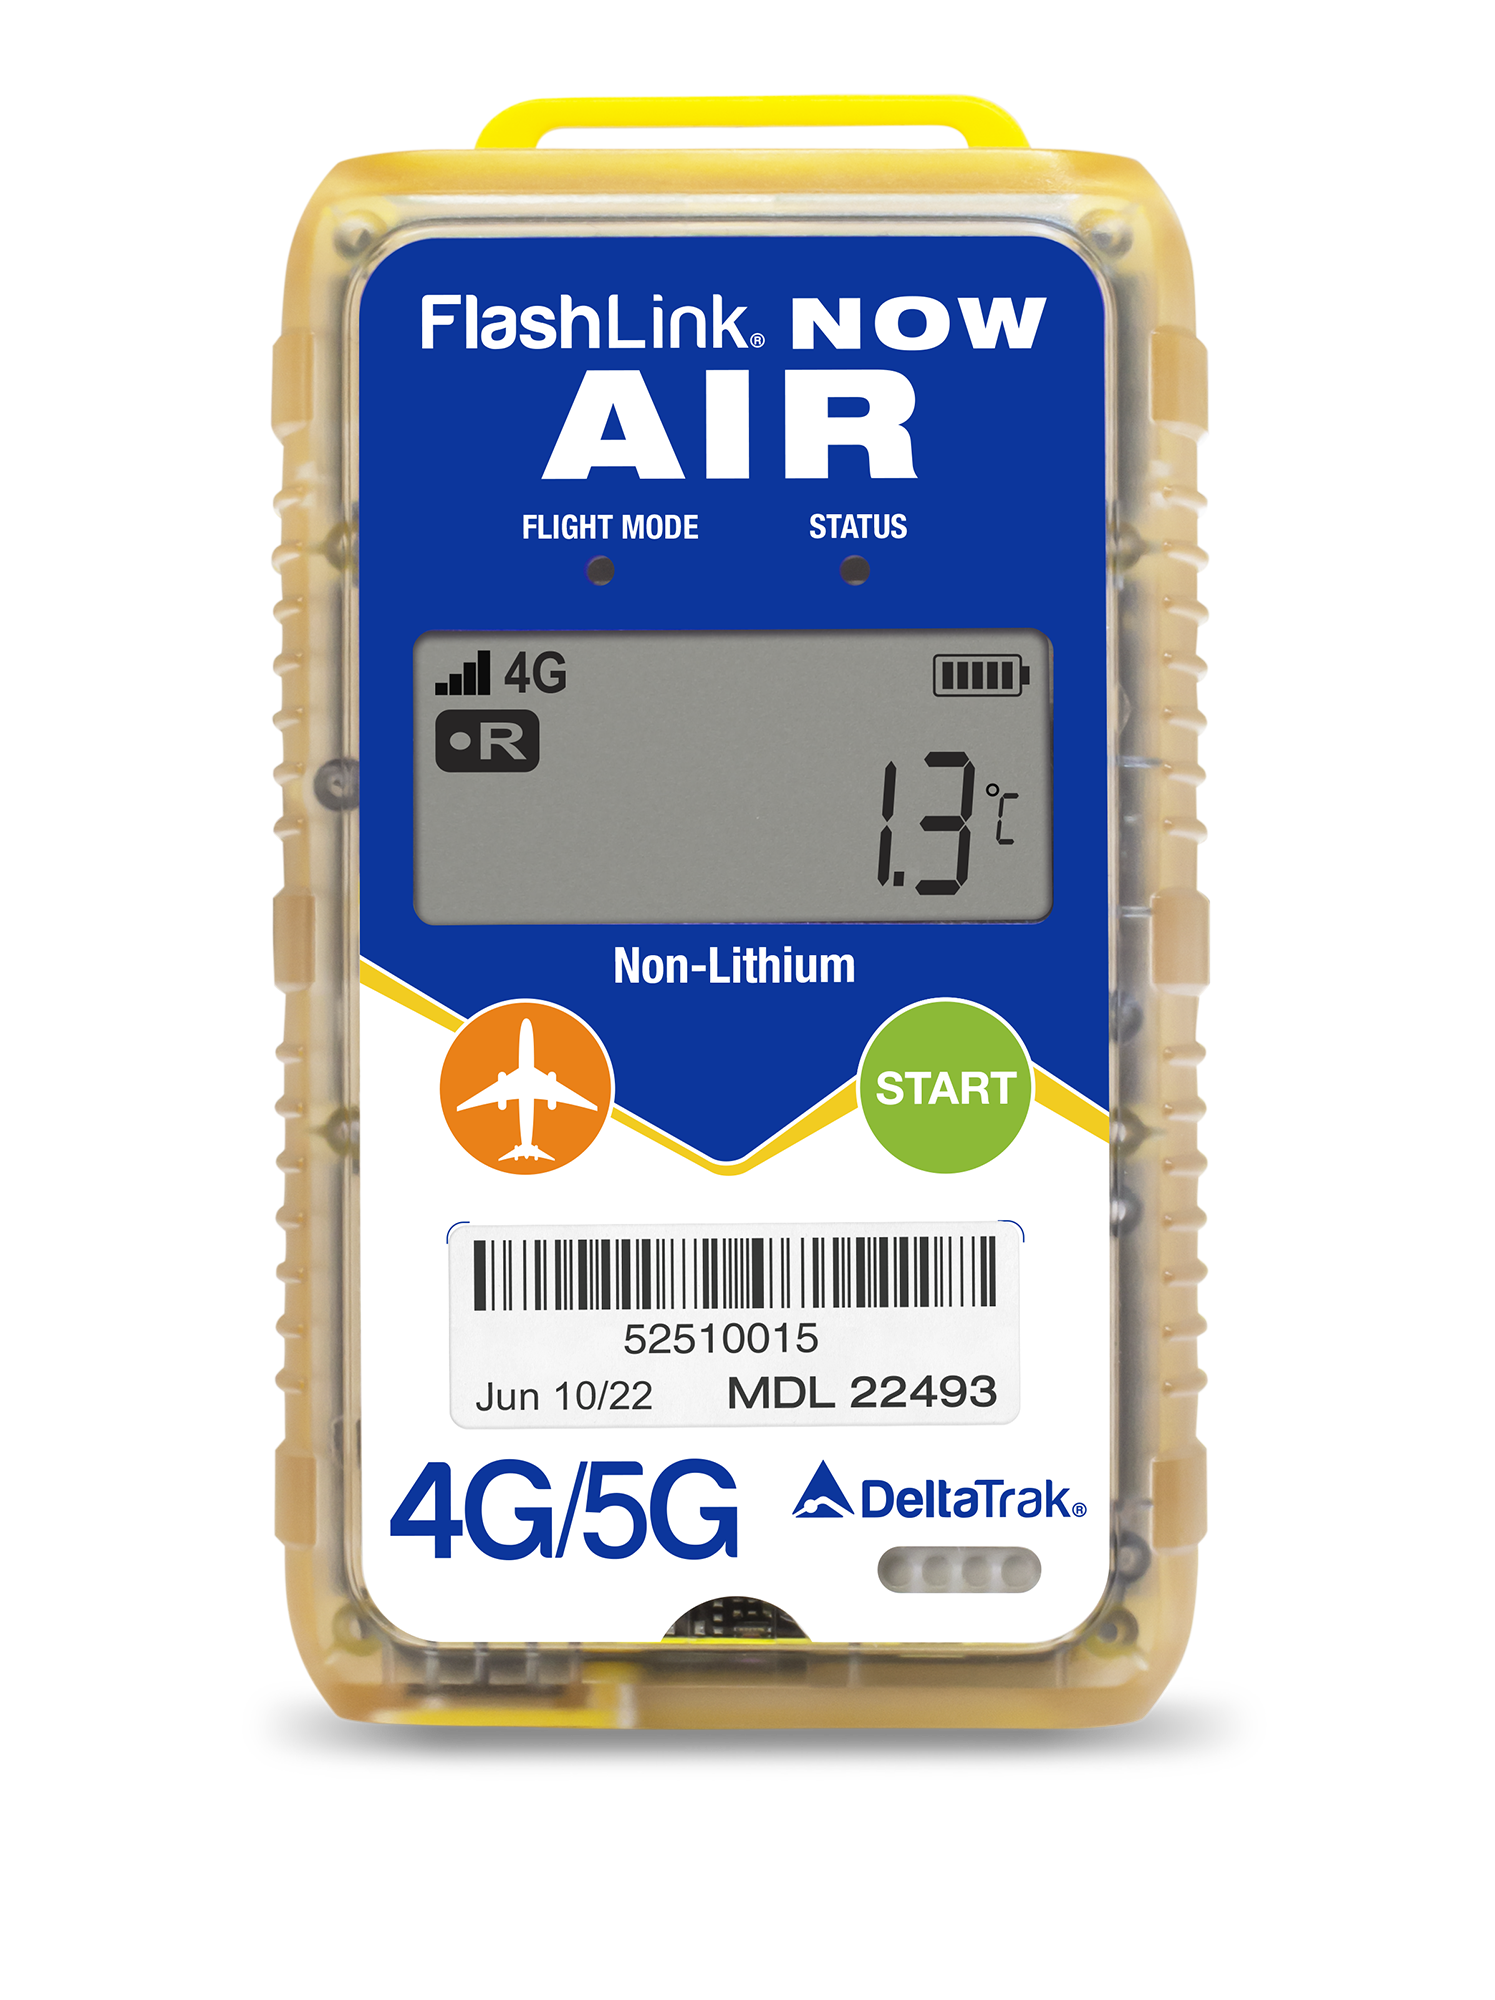 FlashLink® AIR 4G/5G Real-Time In-Transit Logger, Model 22493